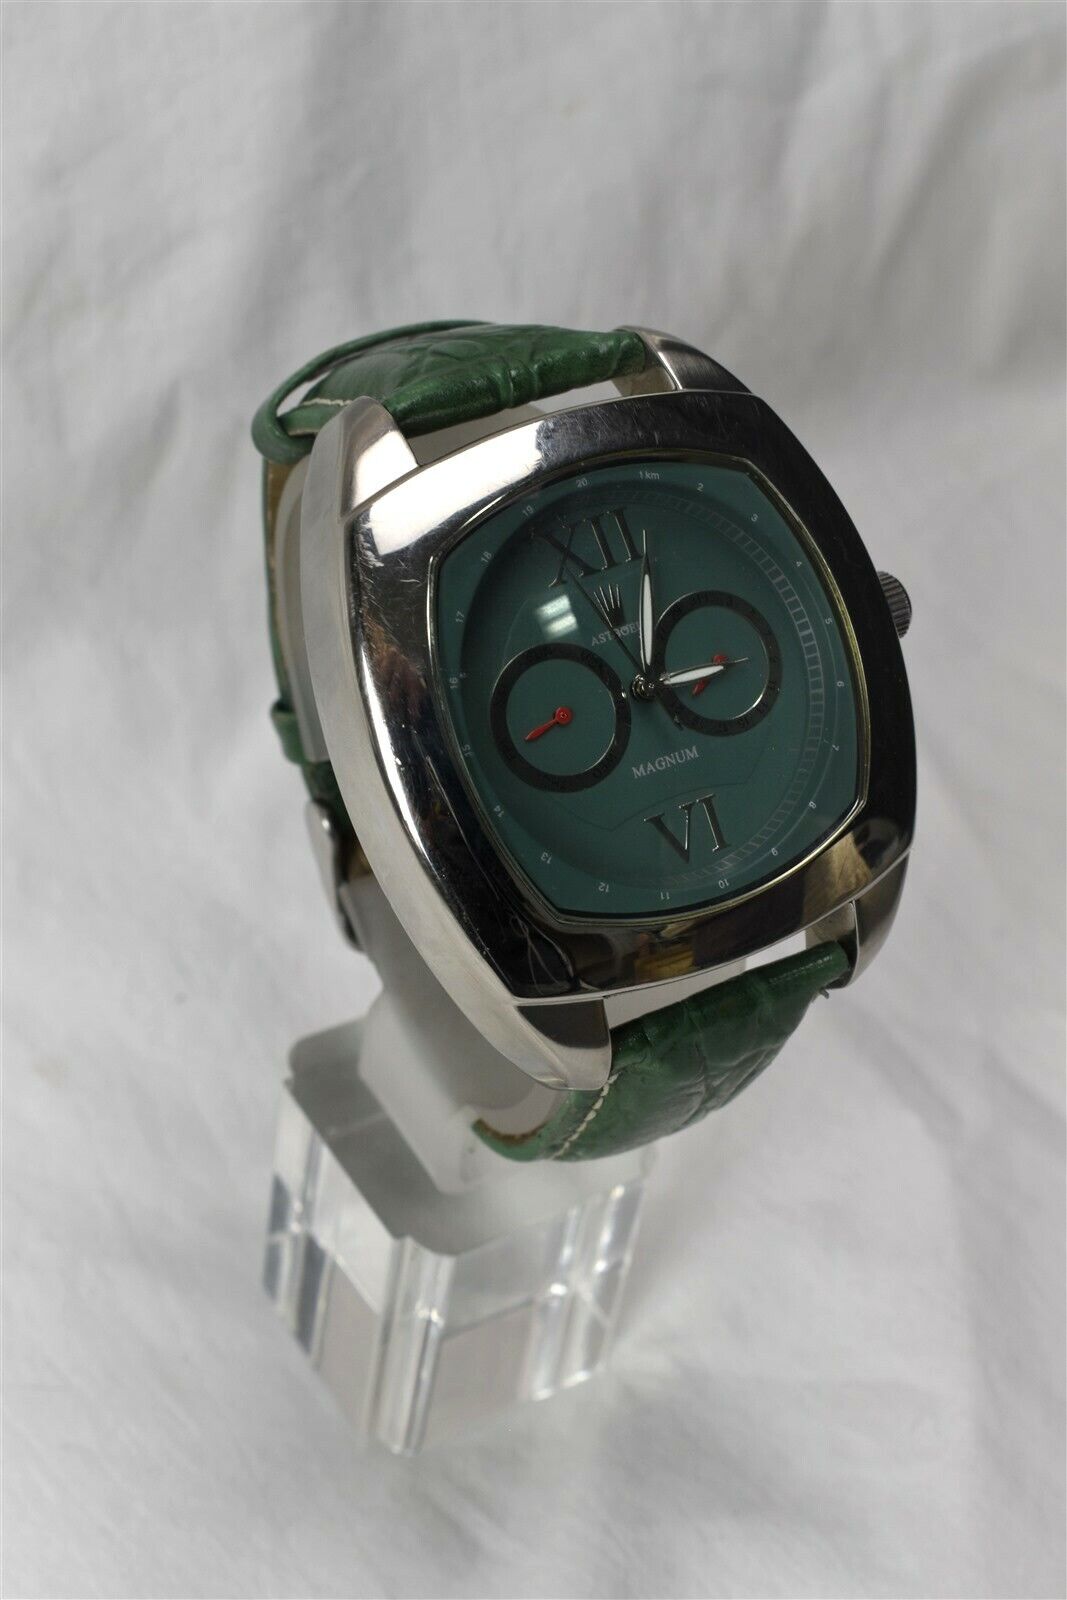 Astboerg Magnum Watch Blue Face Green Band Zeitmesser Berlin 316 Edelstahl AT776